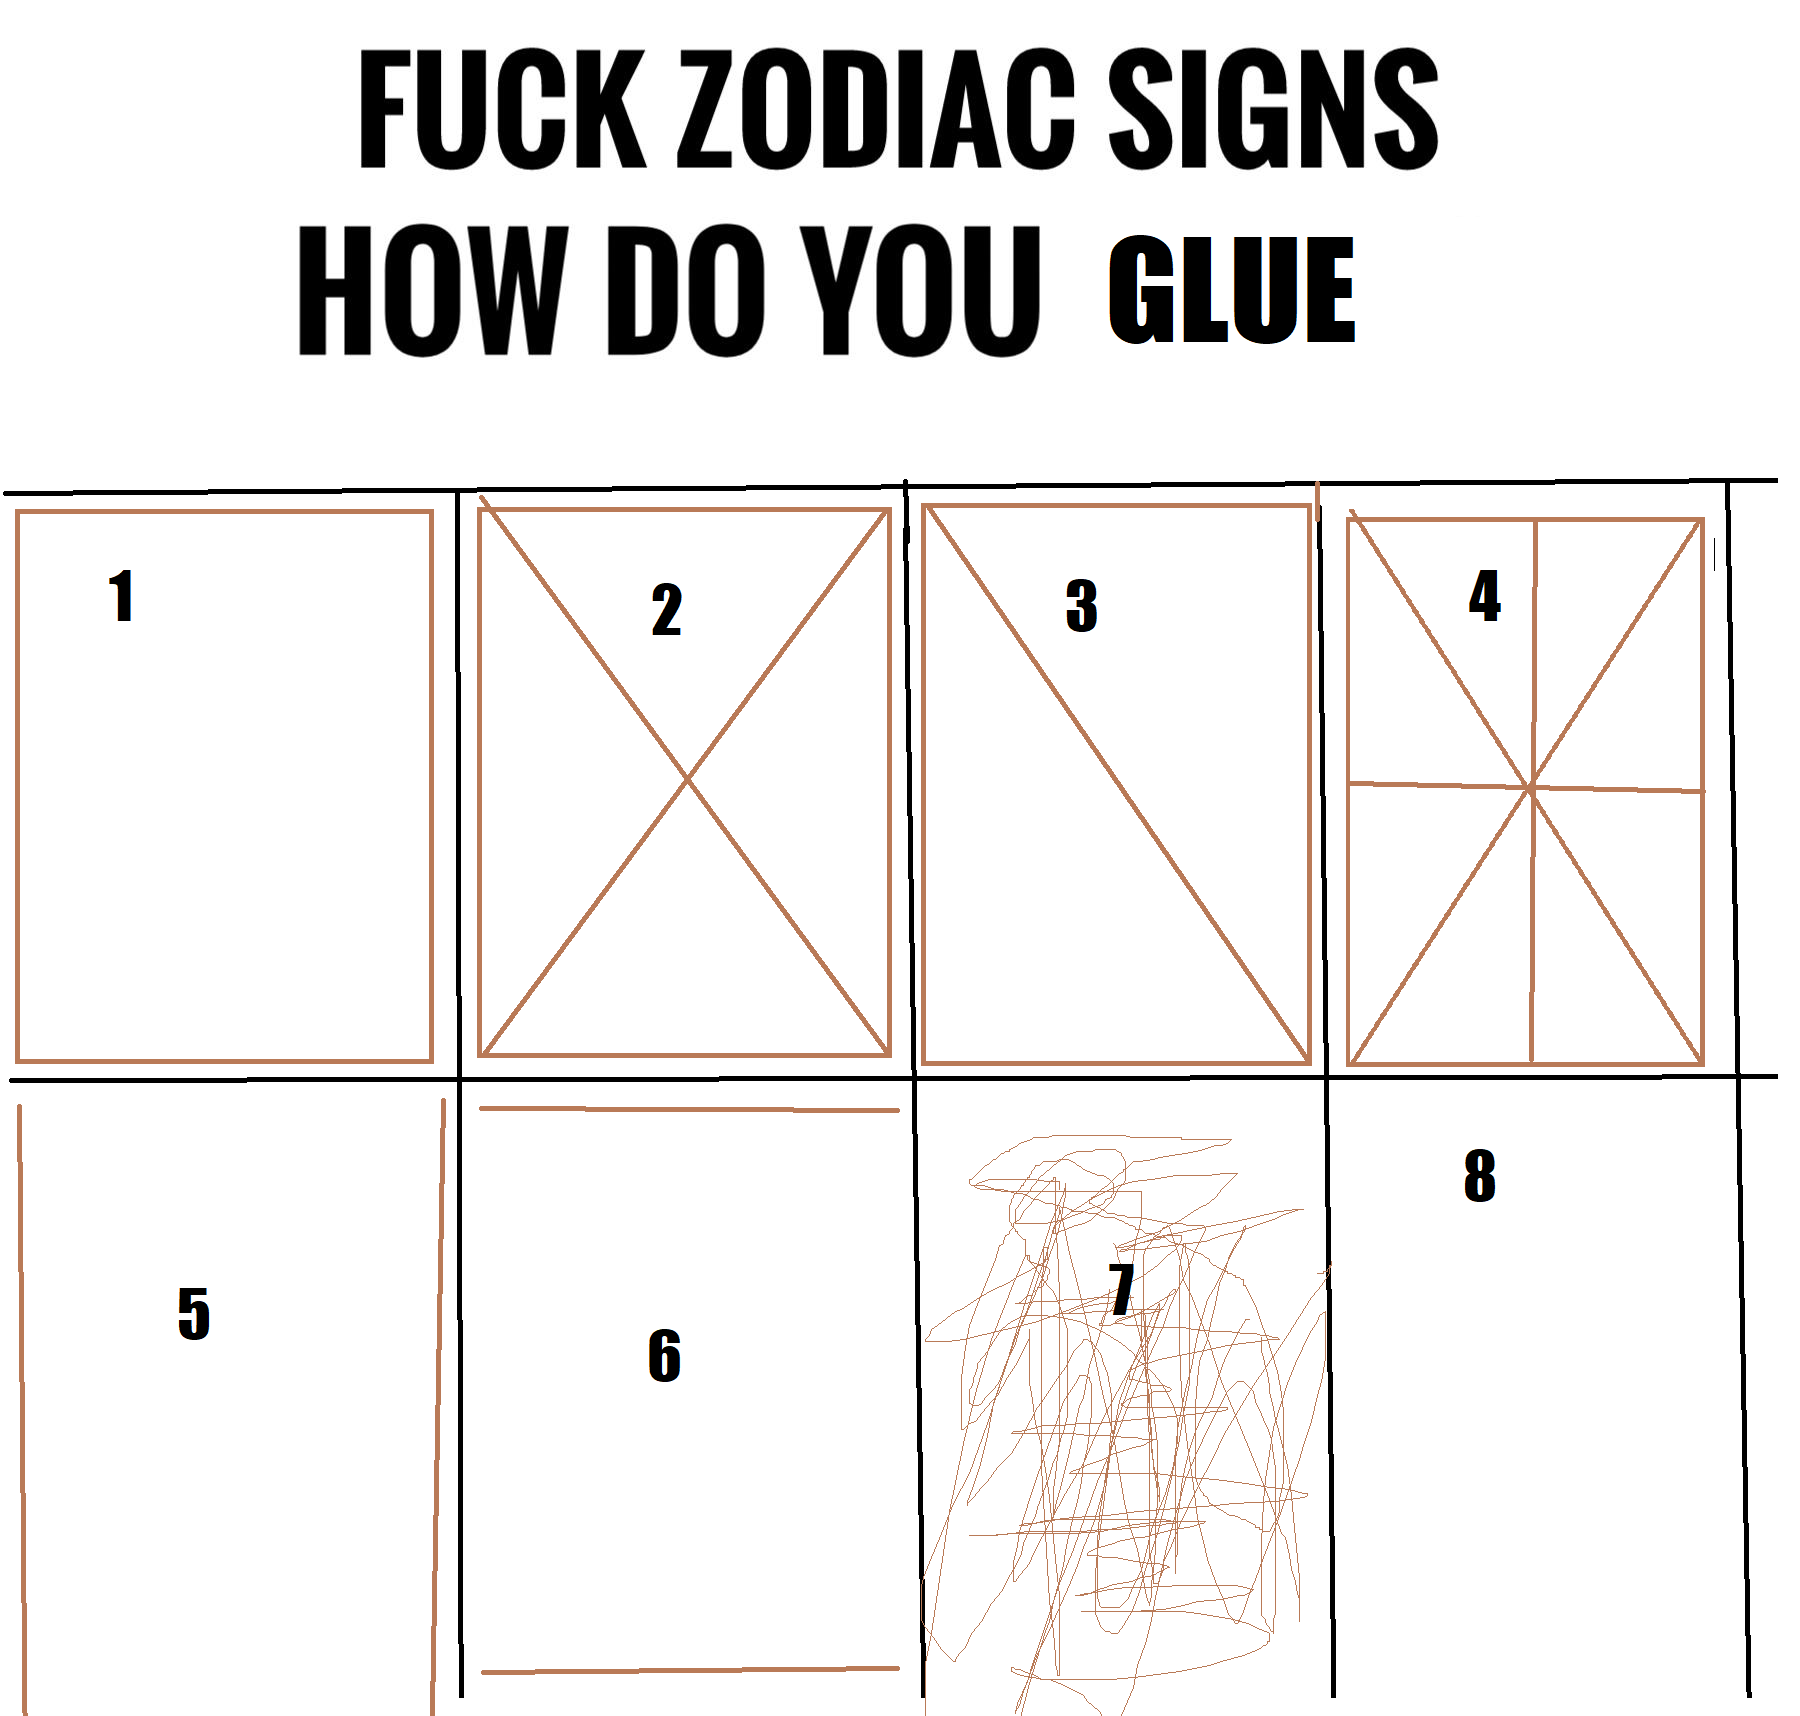 F*ck zodiac signs, how do you glue?